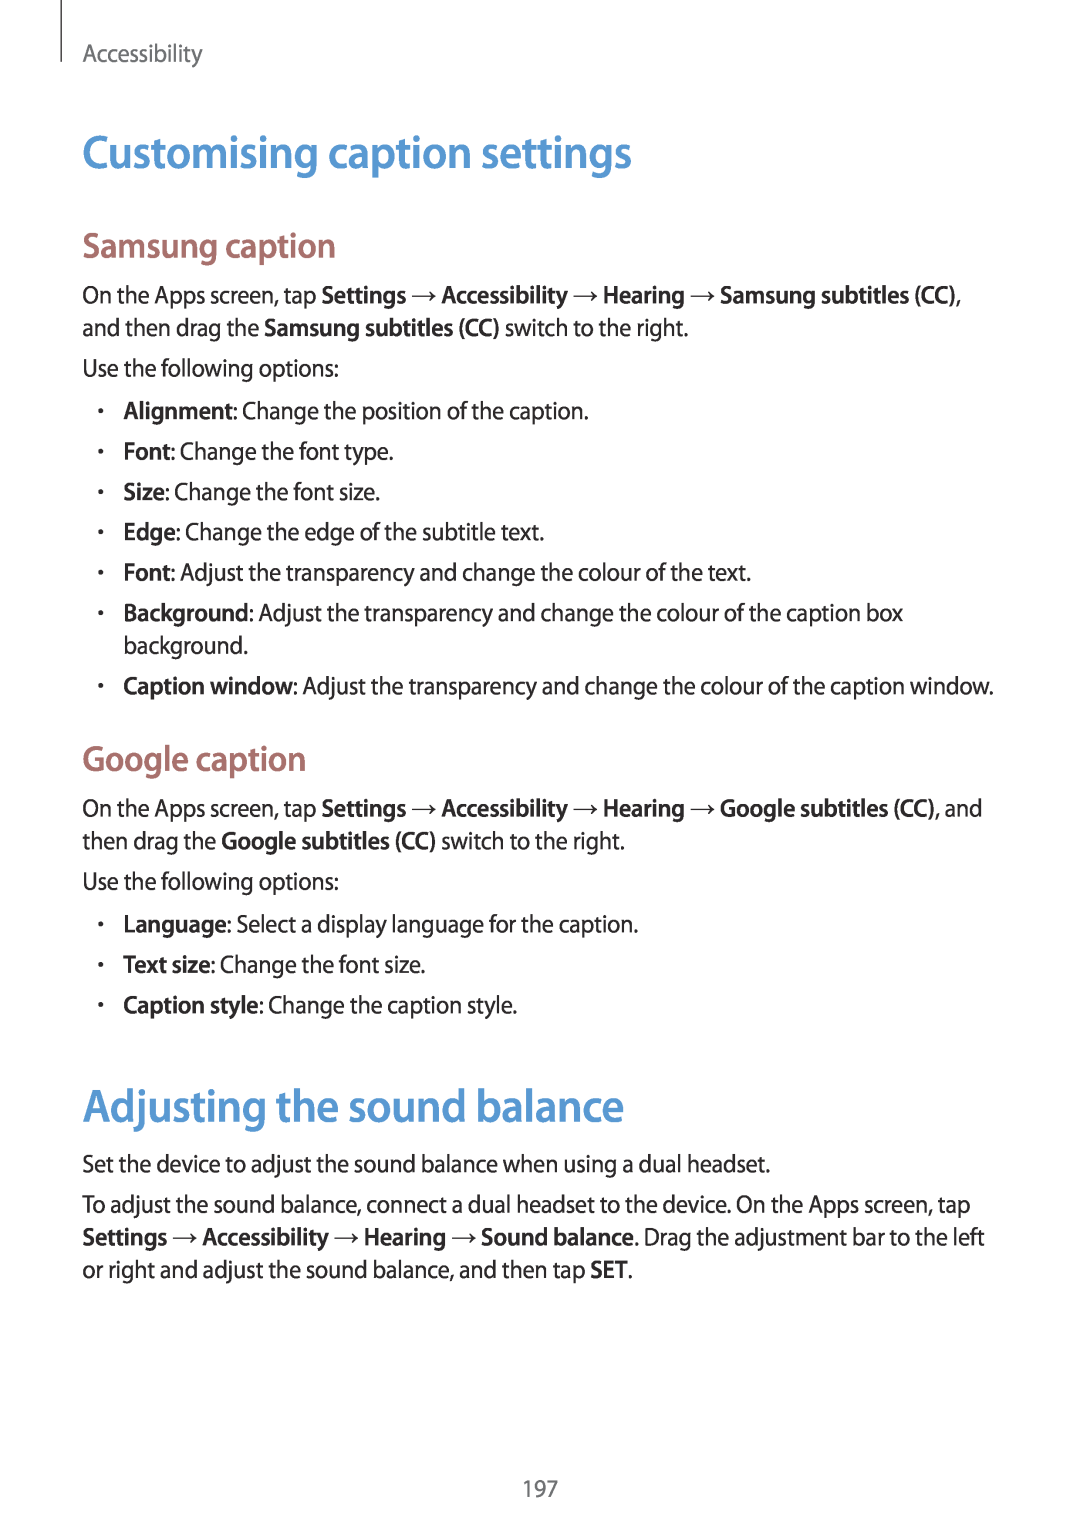 Samsung SM-G901FZDABAL manual Customising caption settings, Adjusting the sound balance, Samsung caption, Google caption 